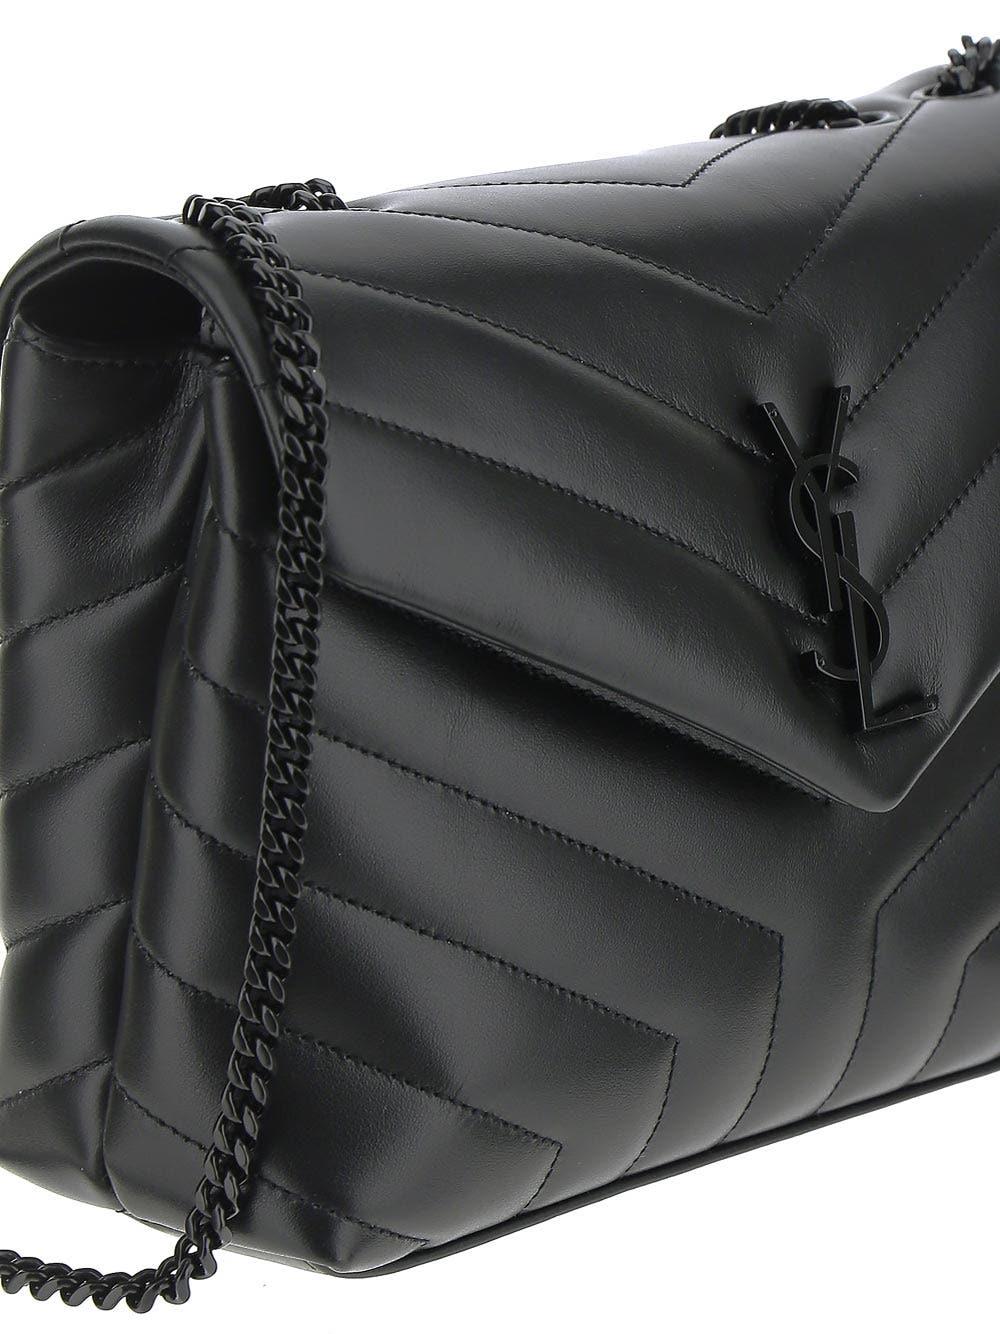 Saint Laurent Loulou Small Matelasse Y Leather Shoulder Bag